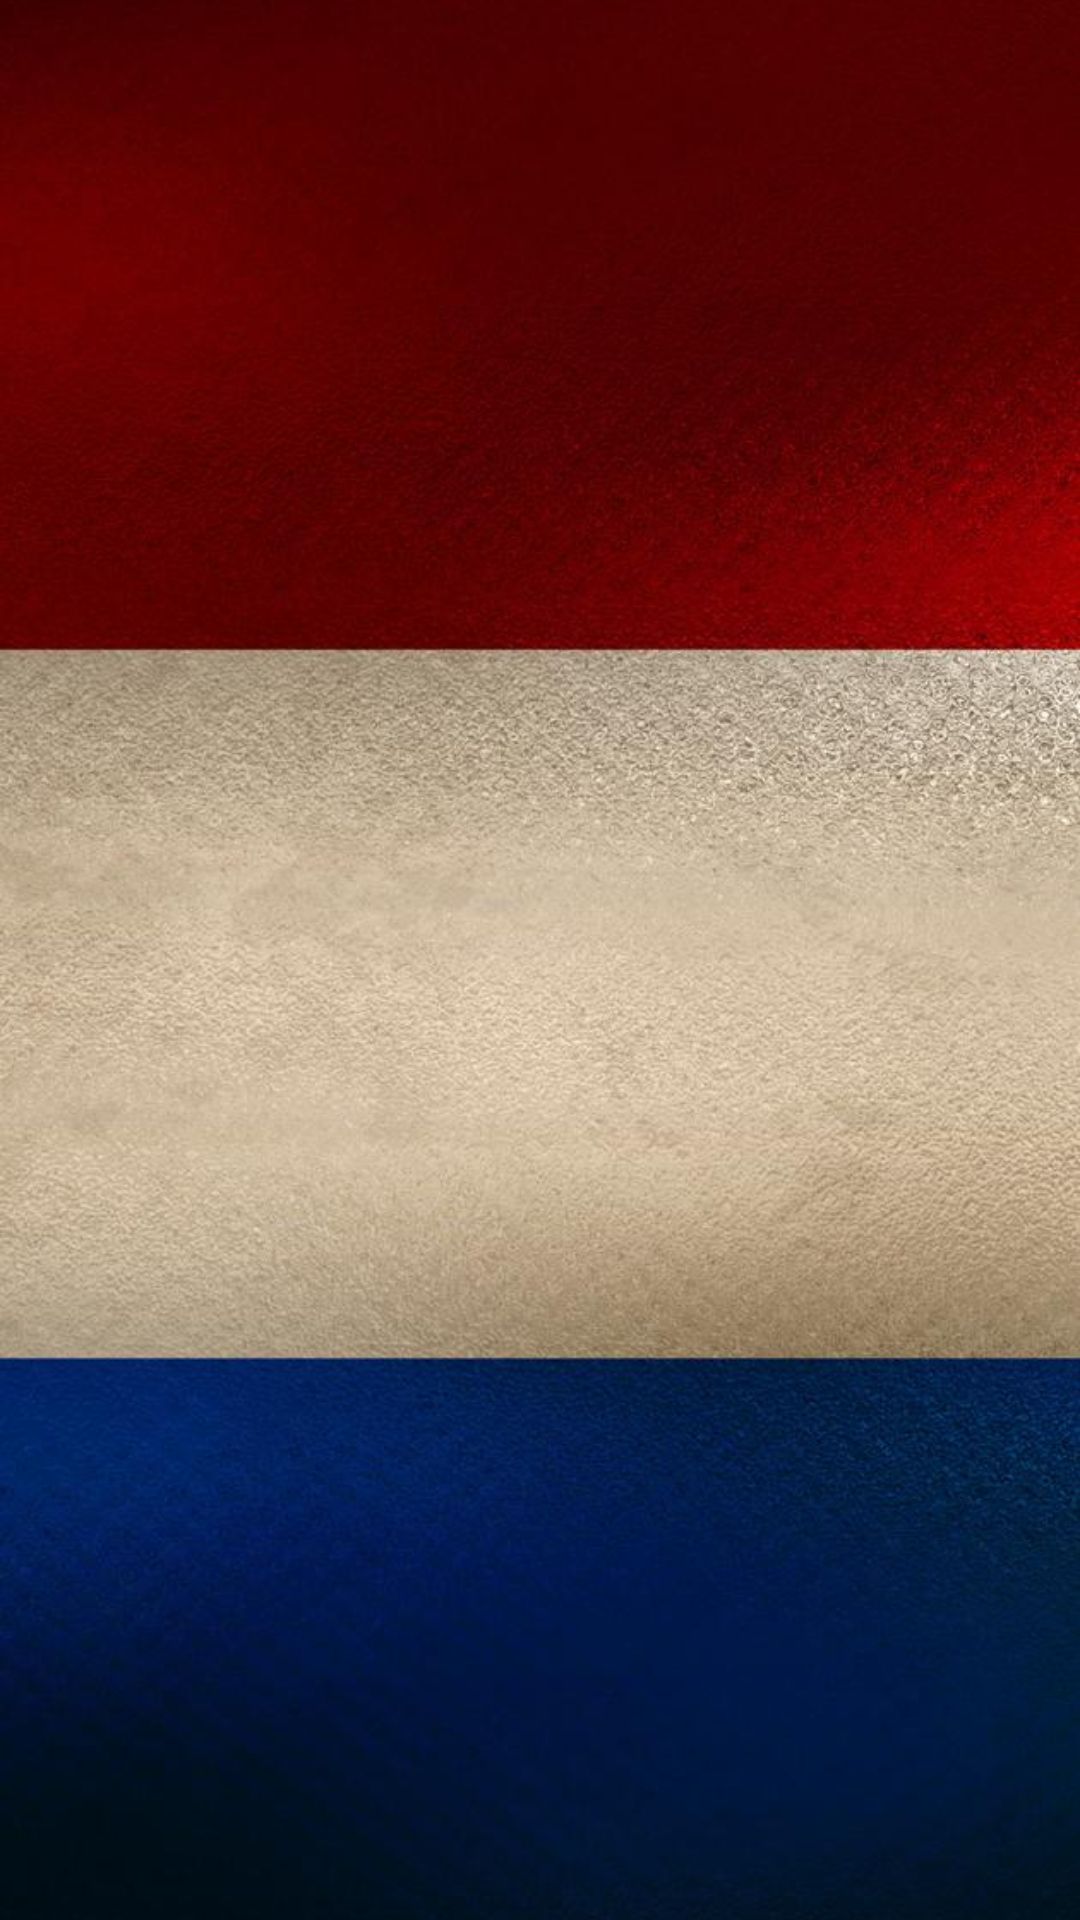 Wallpapers Netherlands Flag